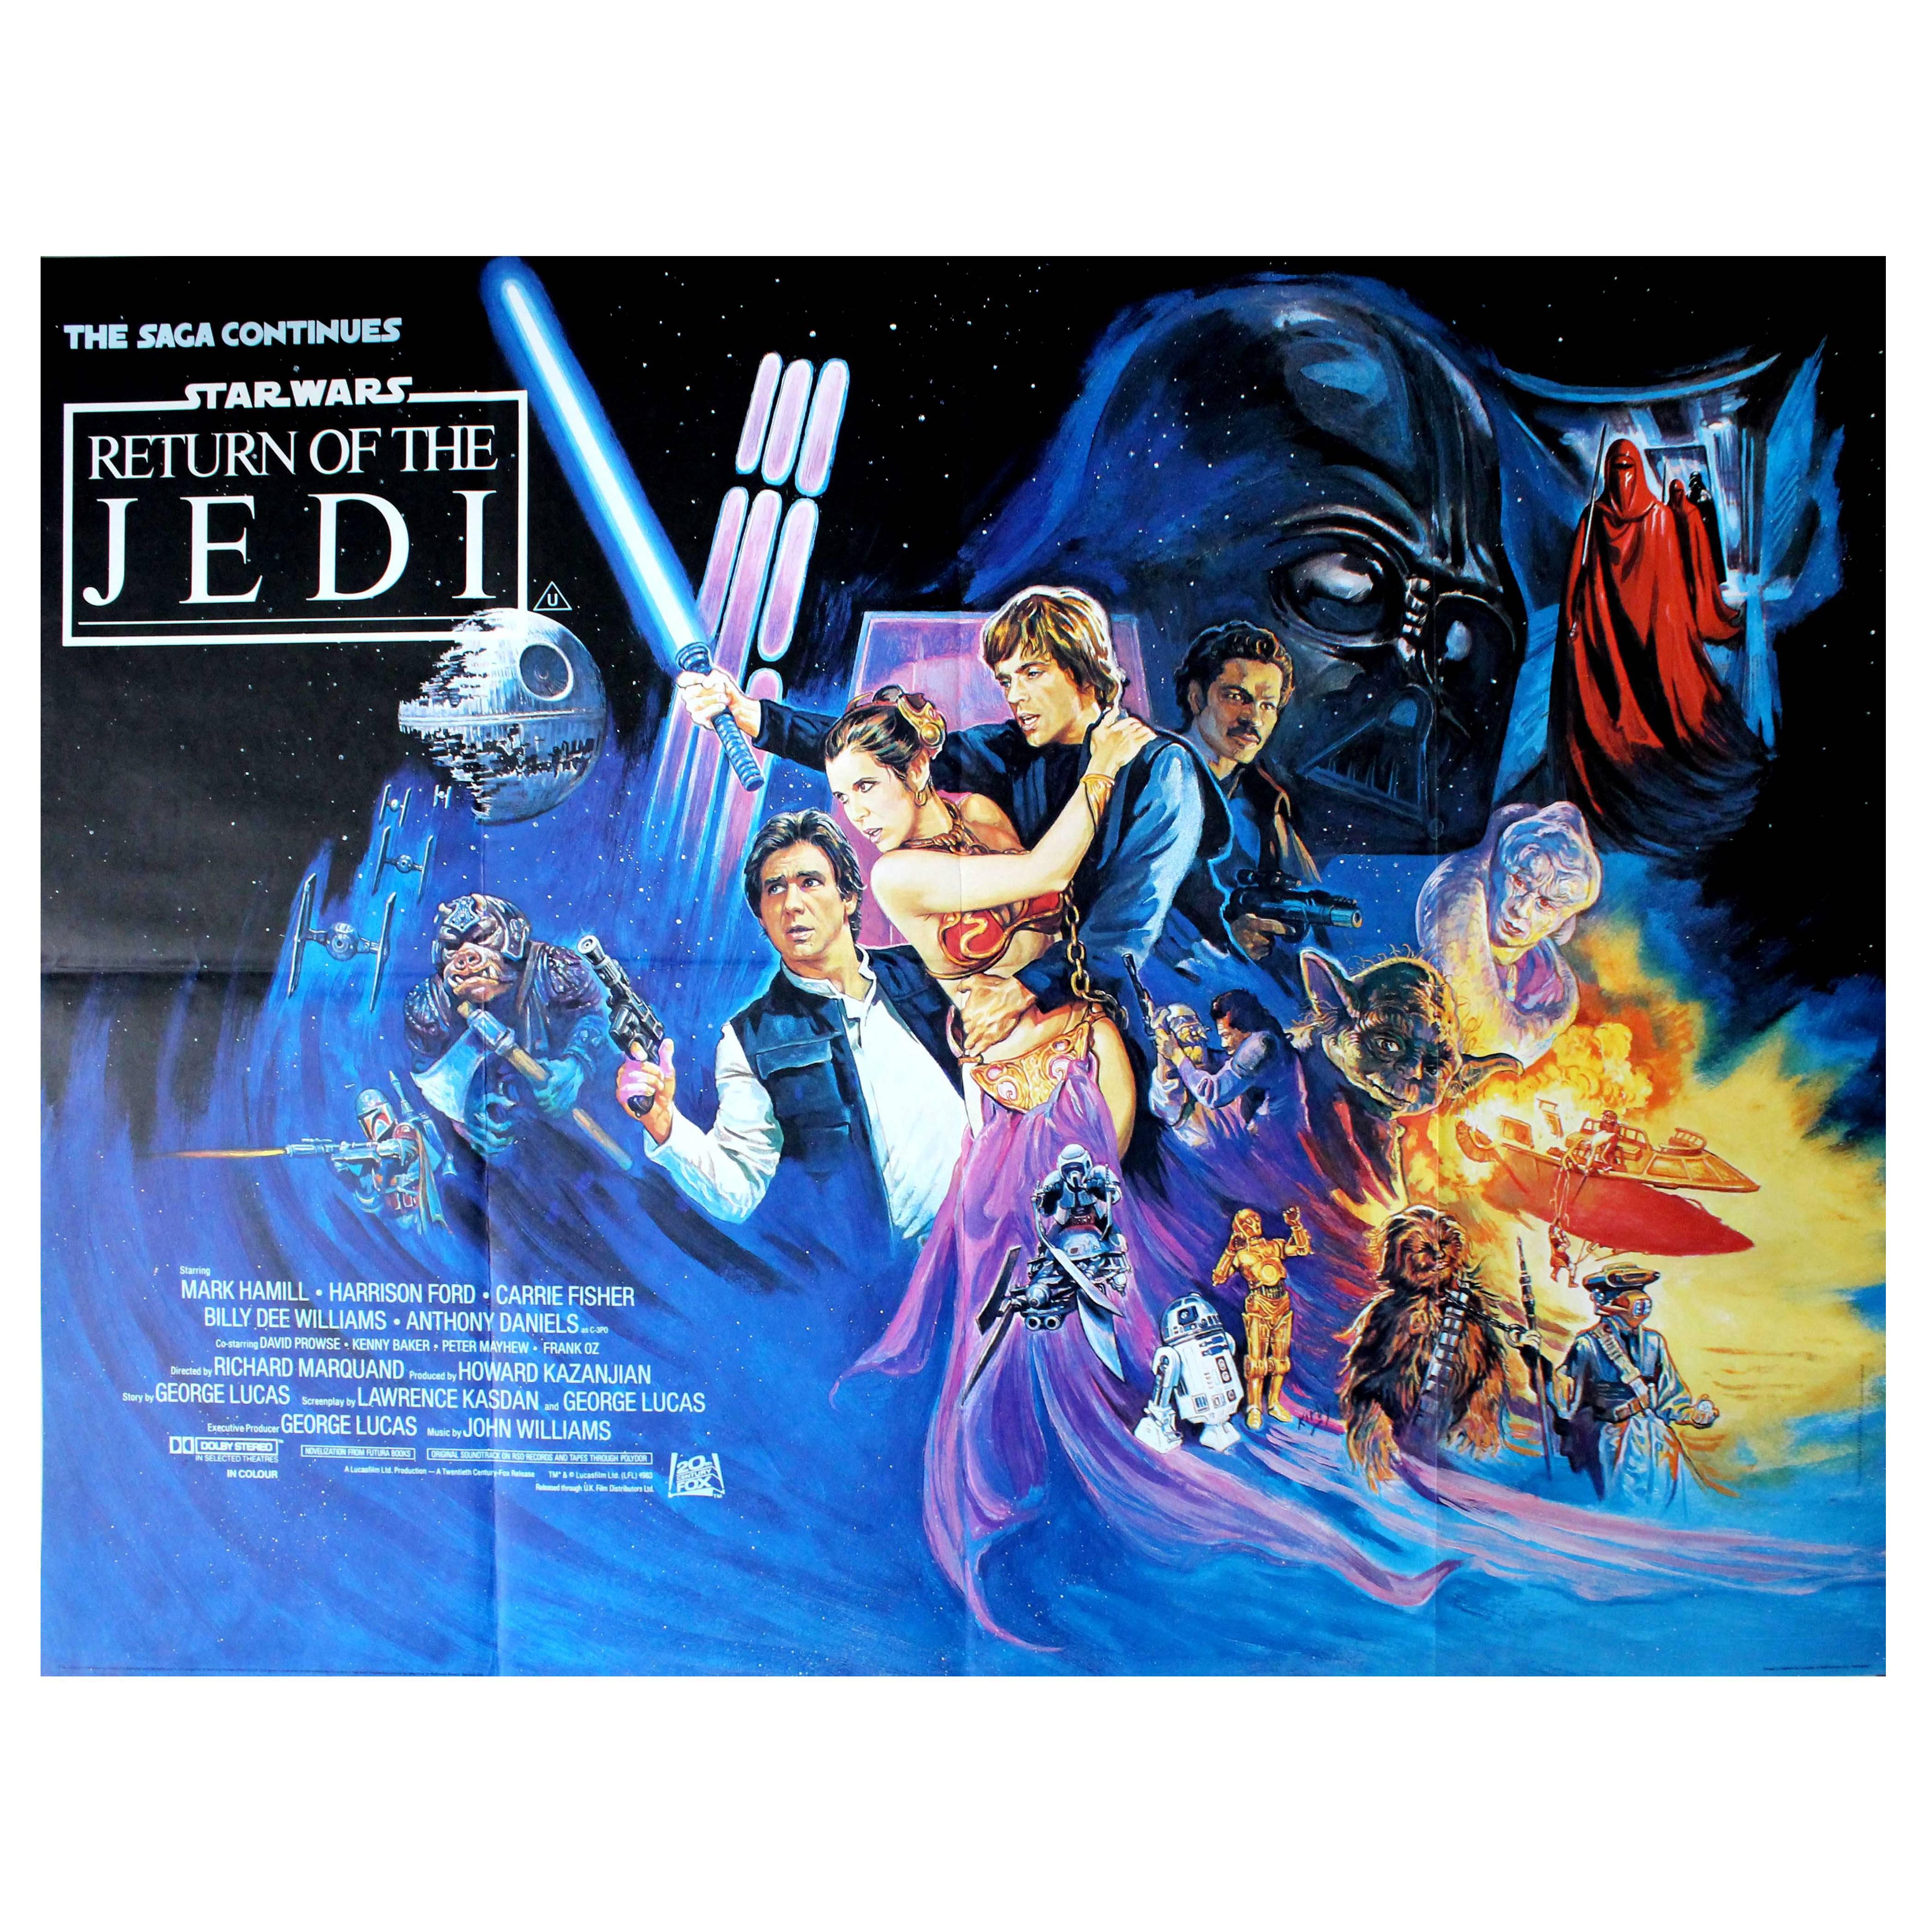 Original Vintage 1983 Movie Poster “Star Wars Episode VI the Return of the Jedi”